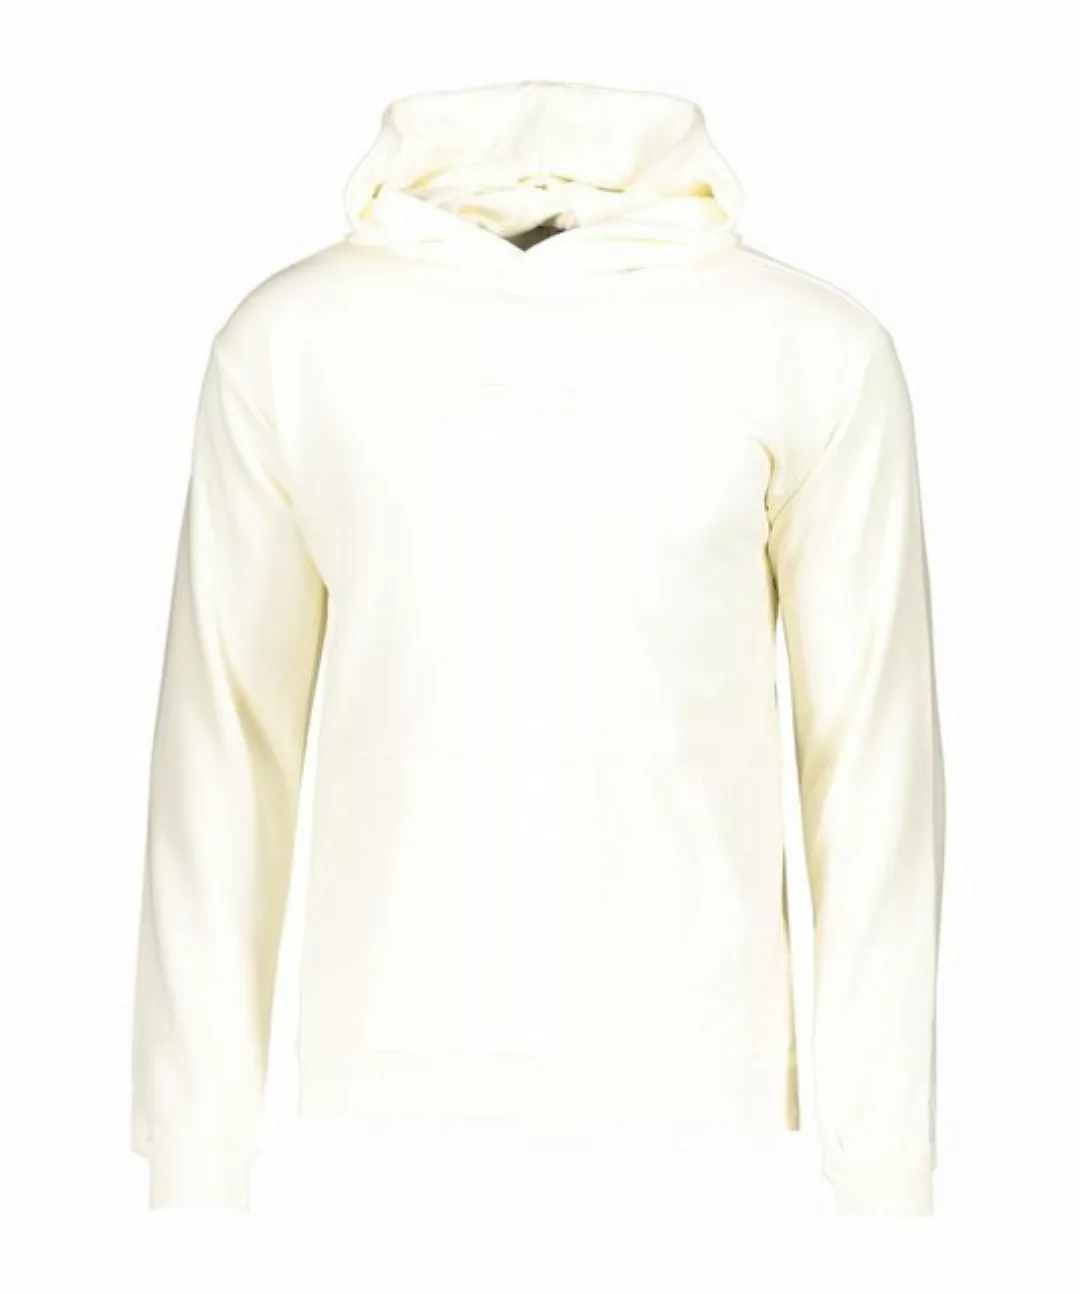 Fila Sweatshirt Beltinci Hoody F70005 günstig online kaufen